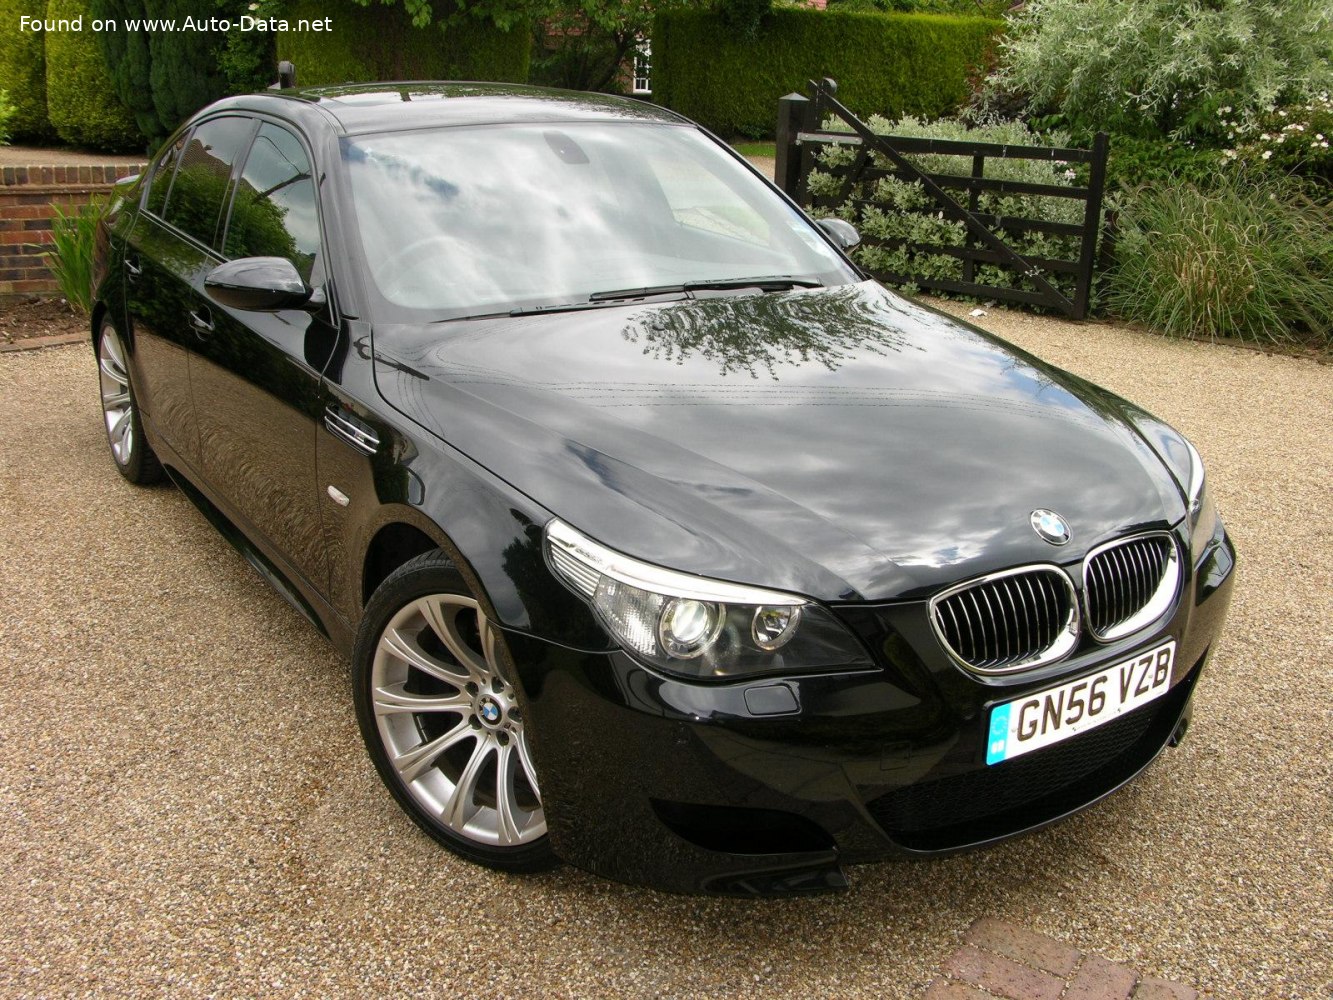 BMW E60 5 Series M5 specs, dimensions